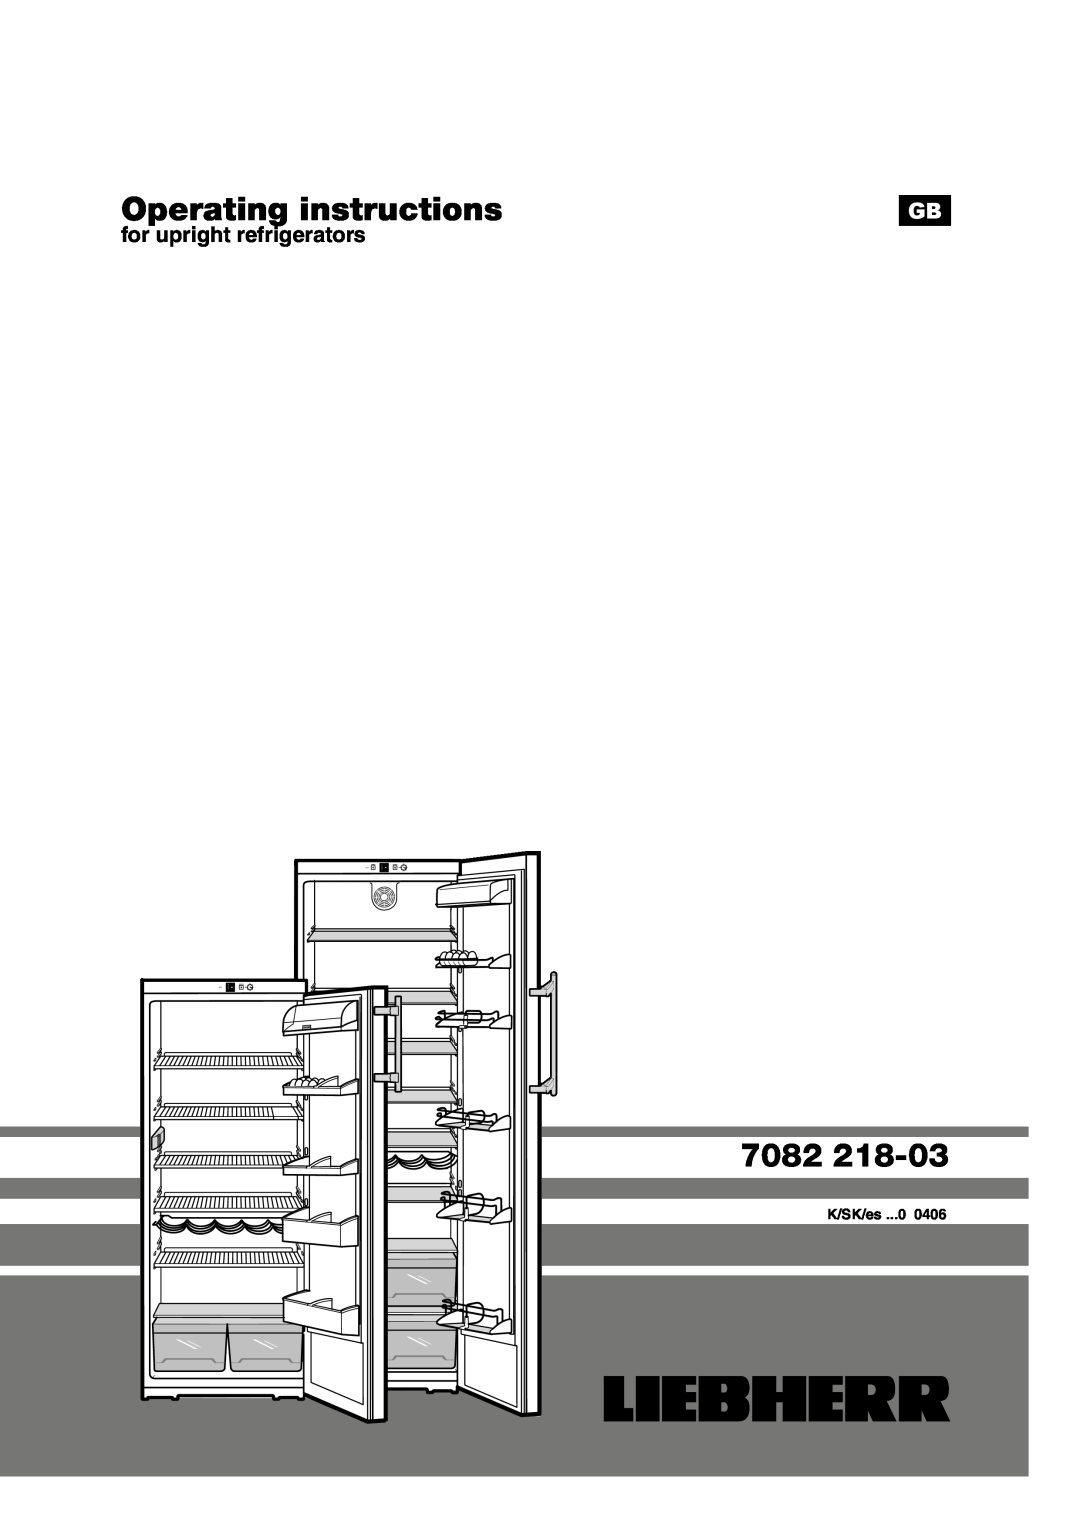 Liebherr 7082 218-03 manual Operating instructions, for upright refrigerators, K/SK/es ...0 